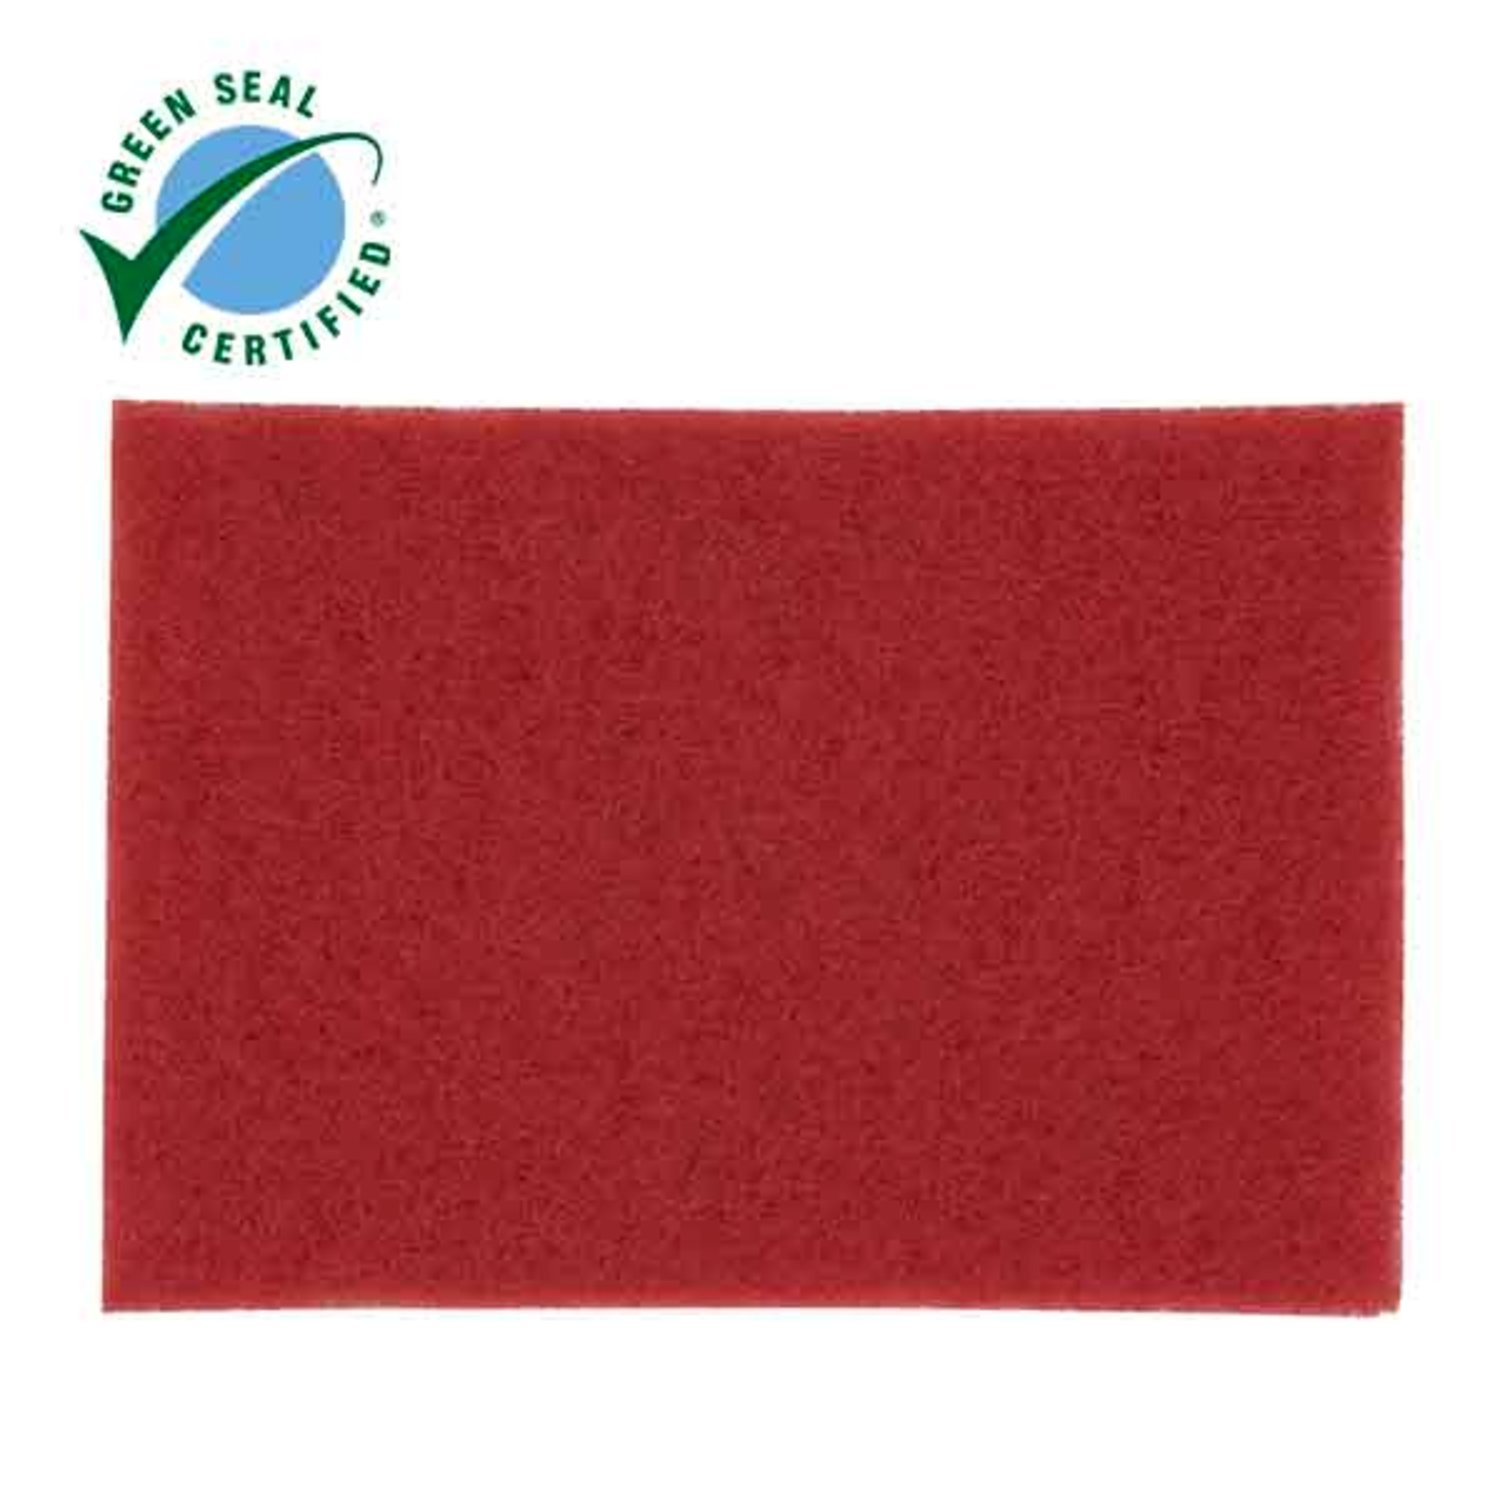 7000126843 - 3M Red Buffer Pad 5100, 32 in x 14 in, 10/Case